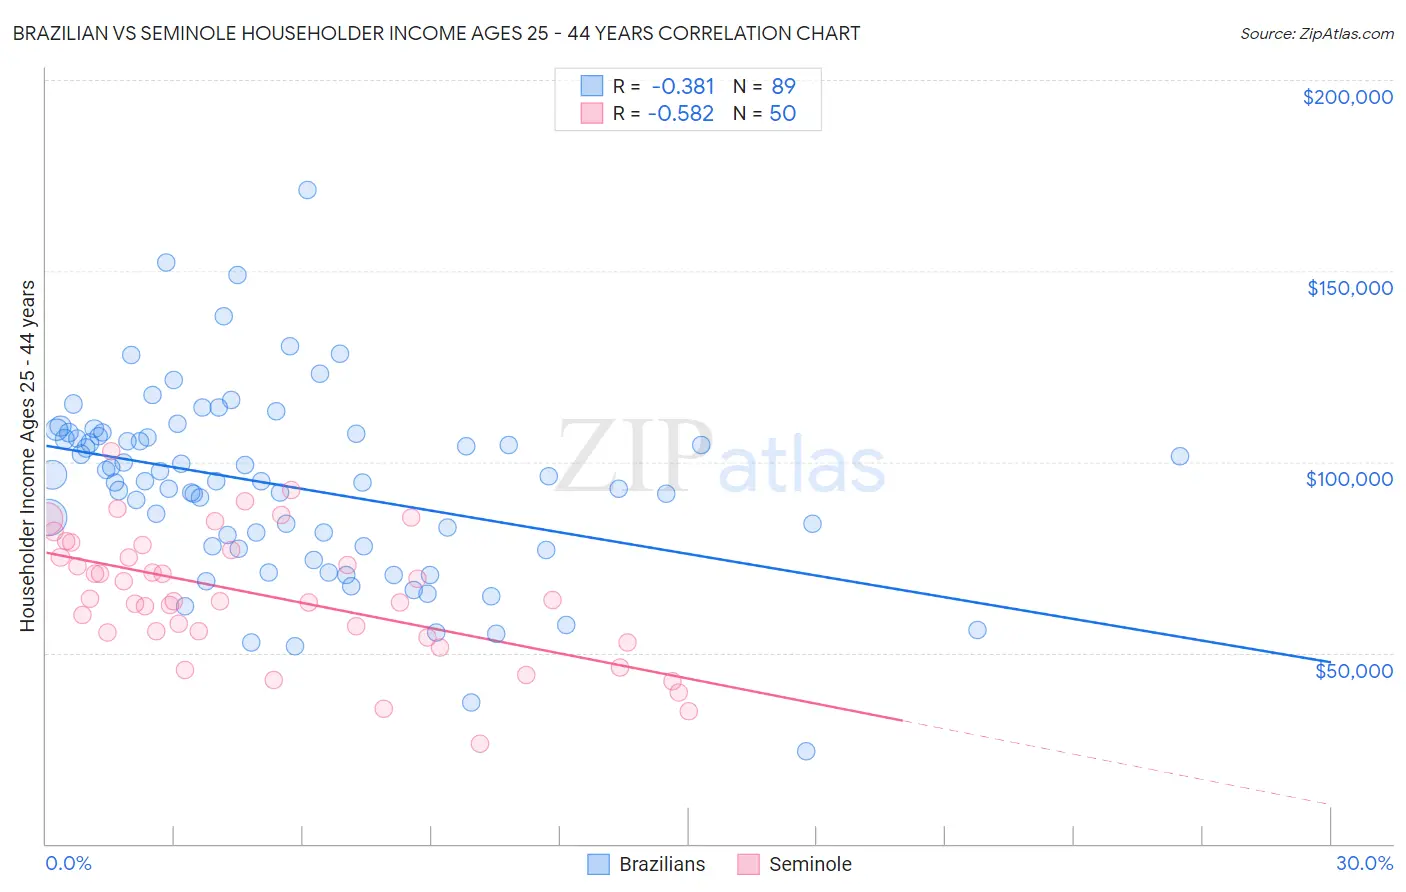 Brazilian vs Seminole Householder Income Ages 25 - 44 years